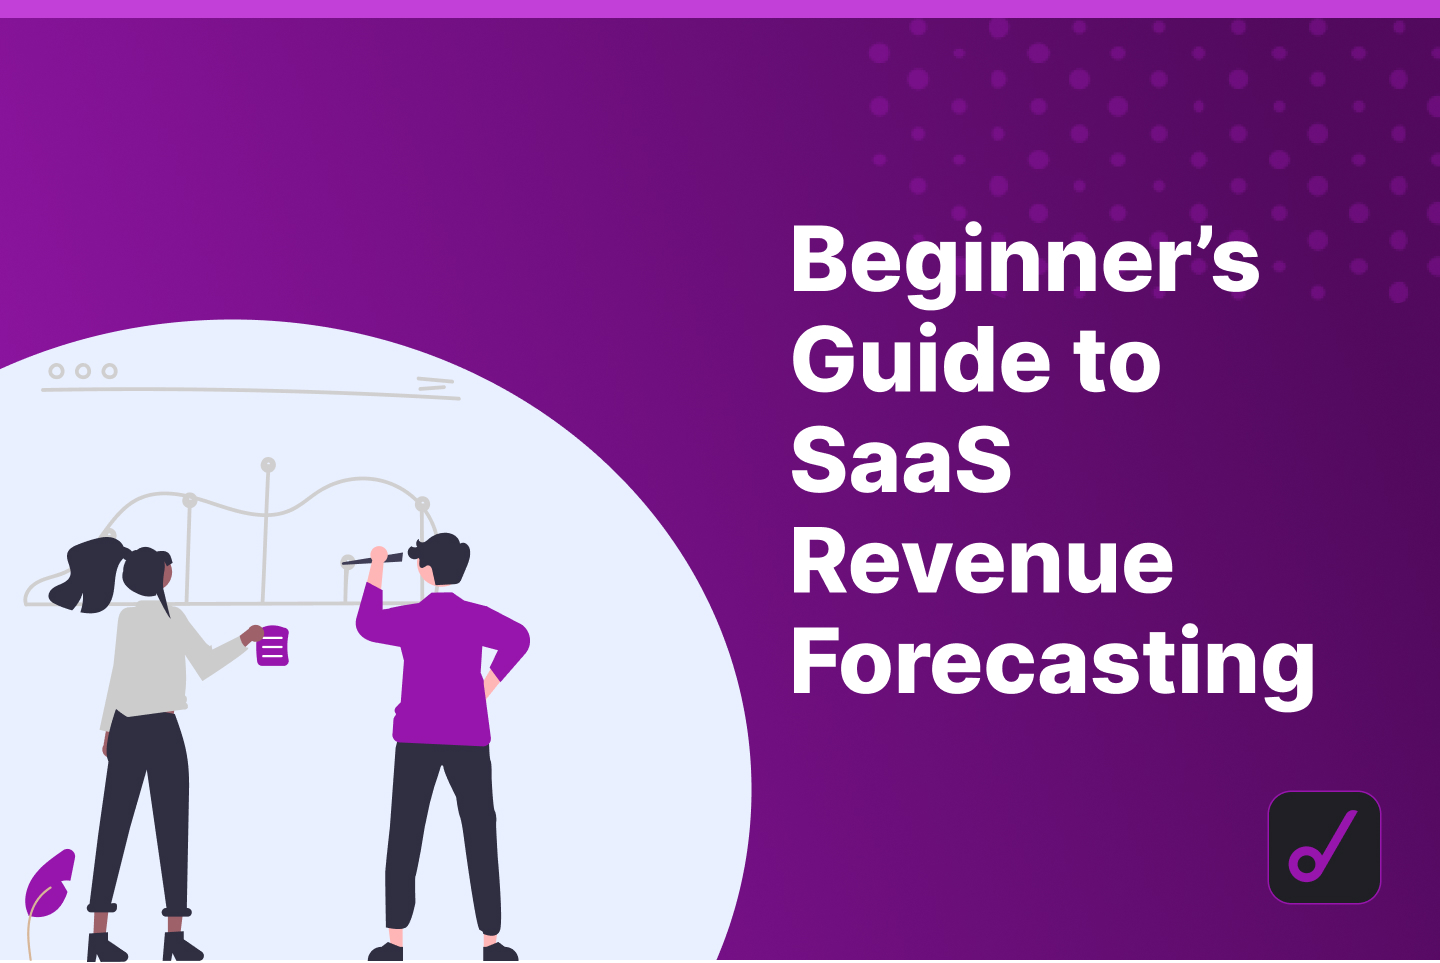 The Beginner’s Guide to SaaS Revenue Forecasting + Revenue Template